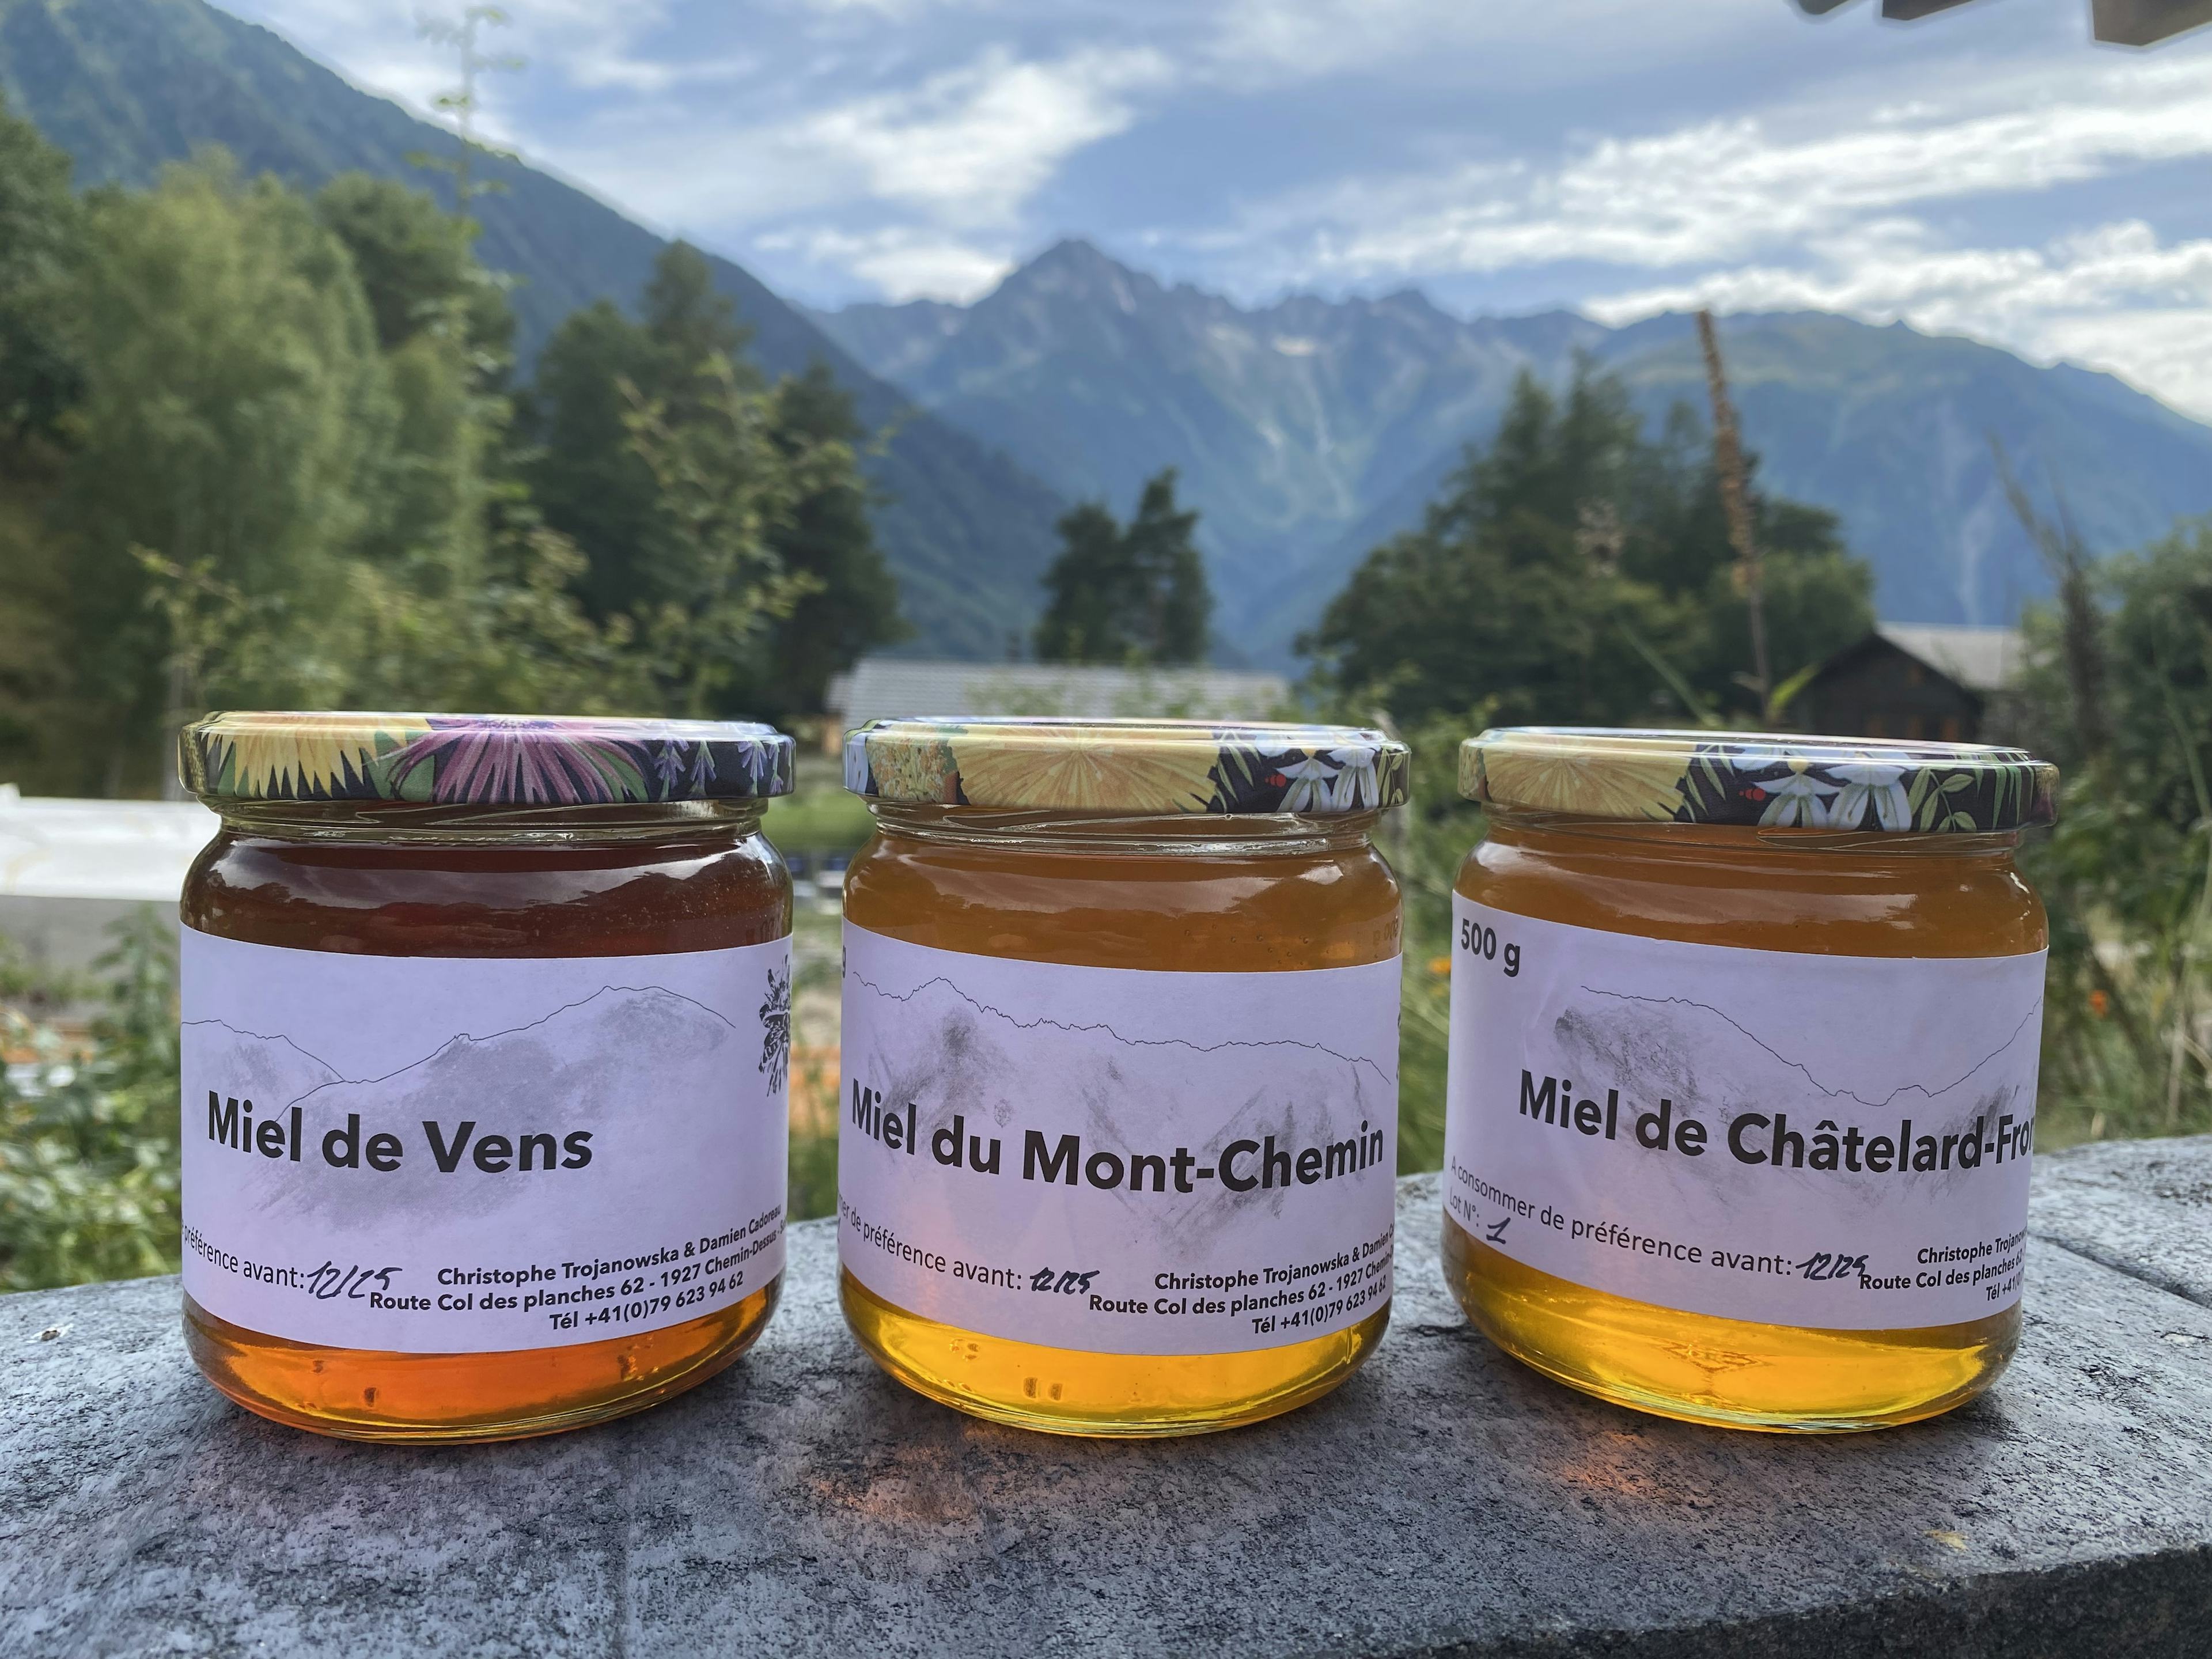 Miel de Chatelard Frontiere, artisanal product for direct sale in Switzerland